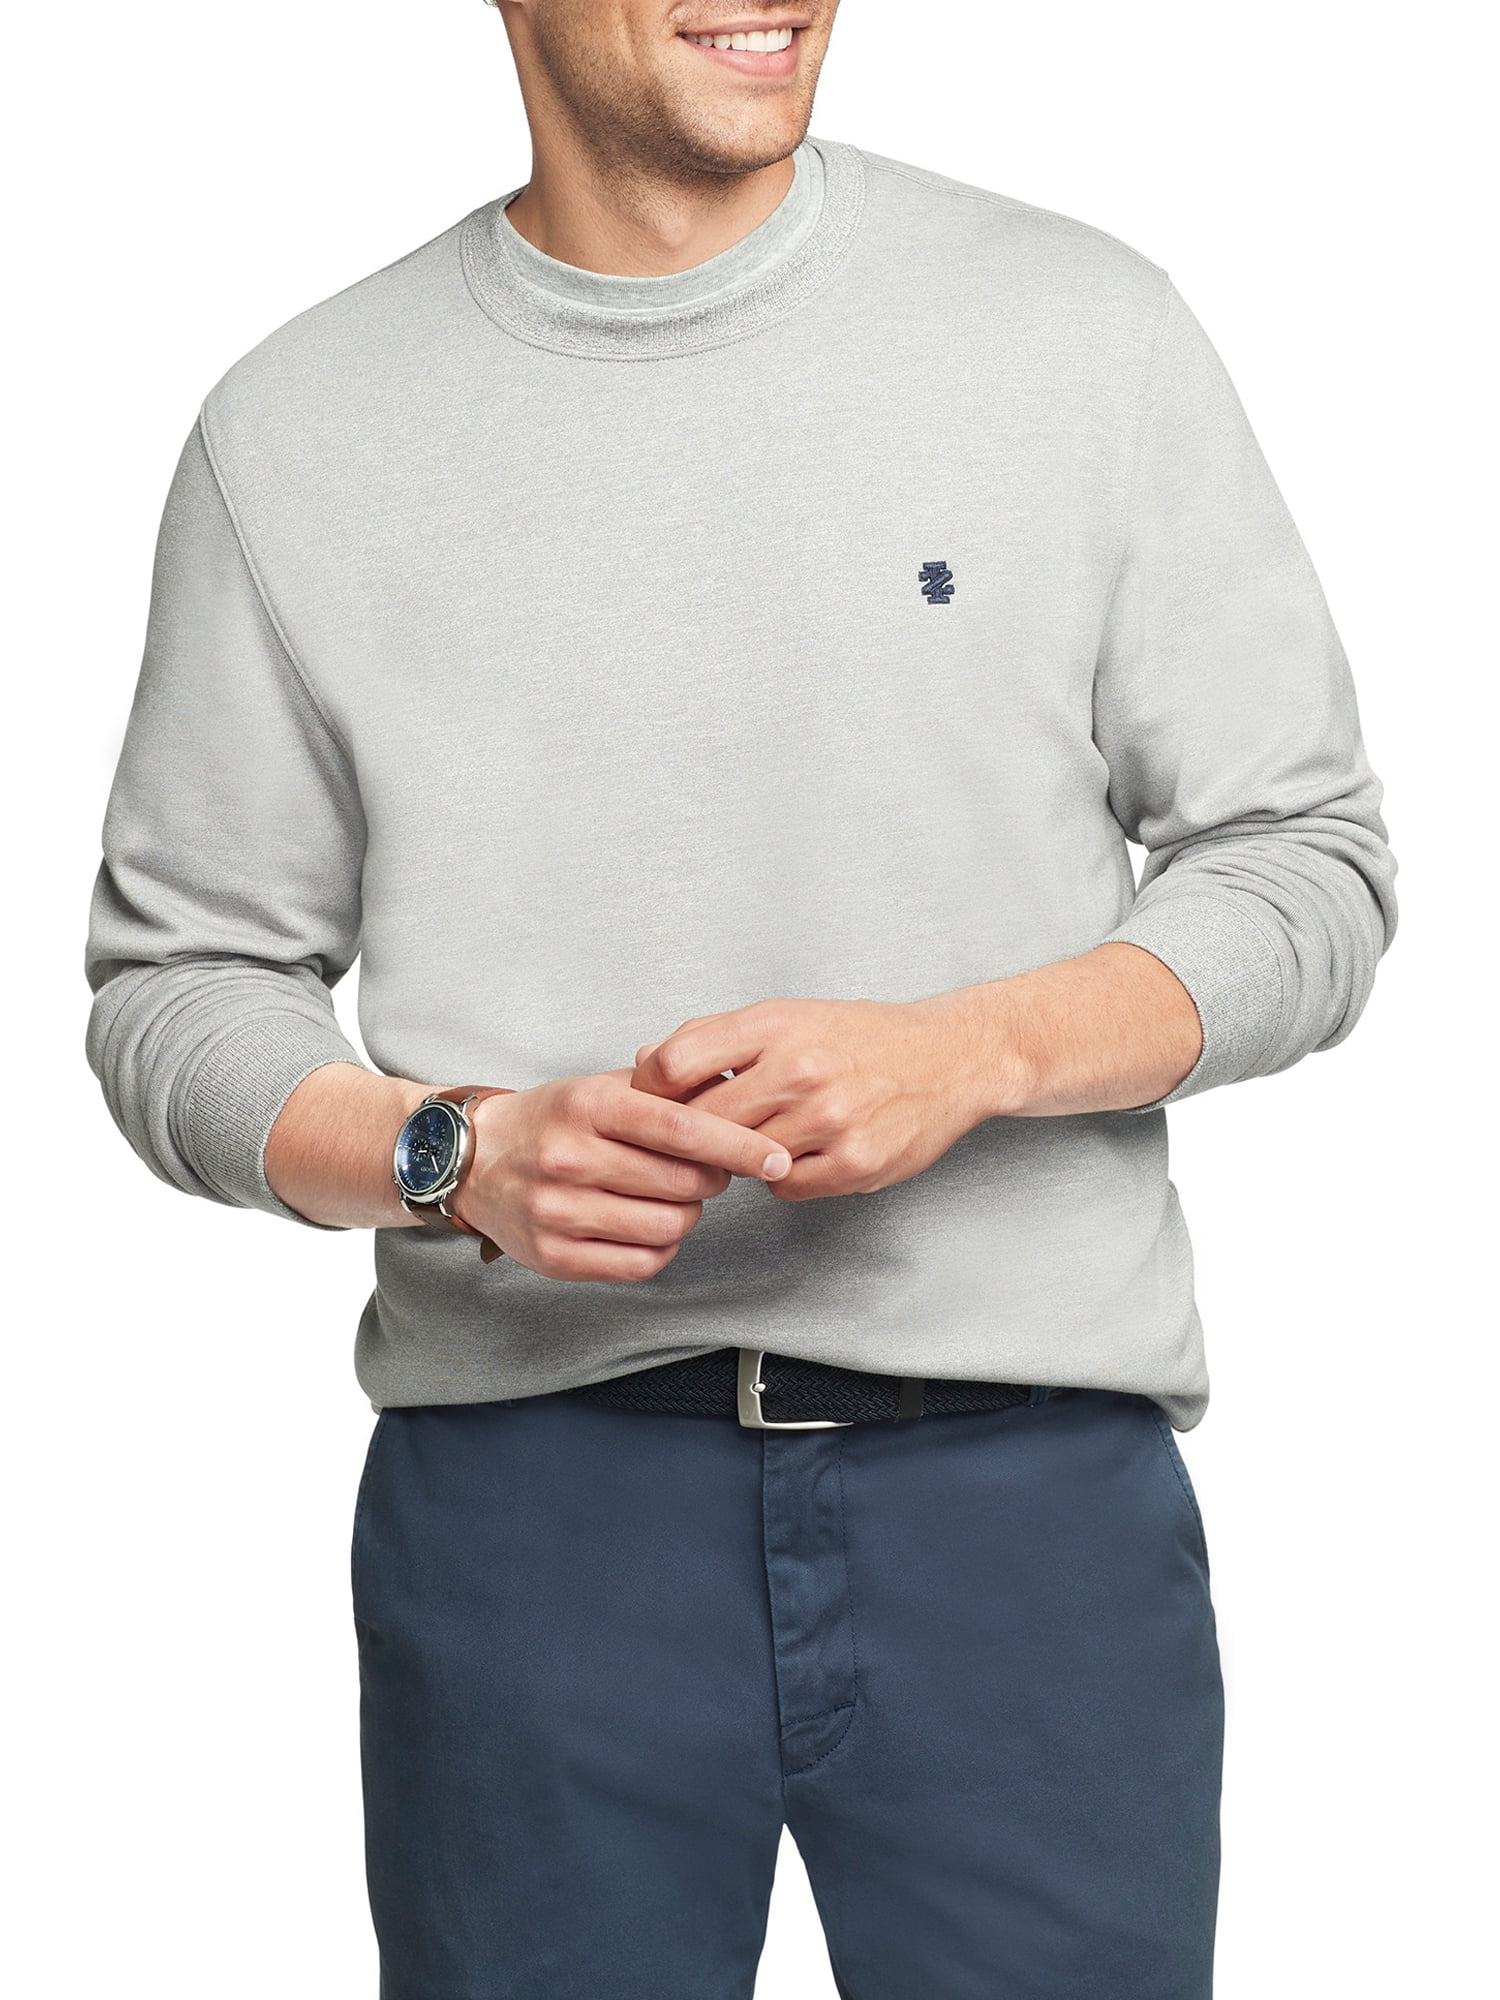 IZOD Men's Advantage Performance Crewneck Fleece Sweatshirt 